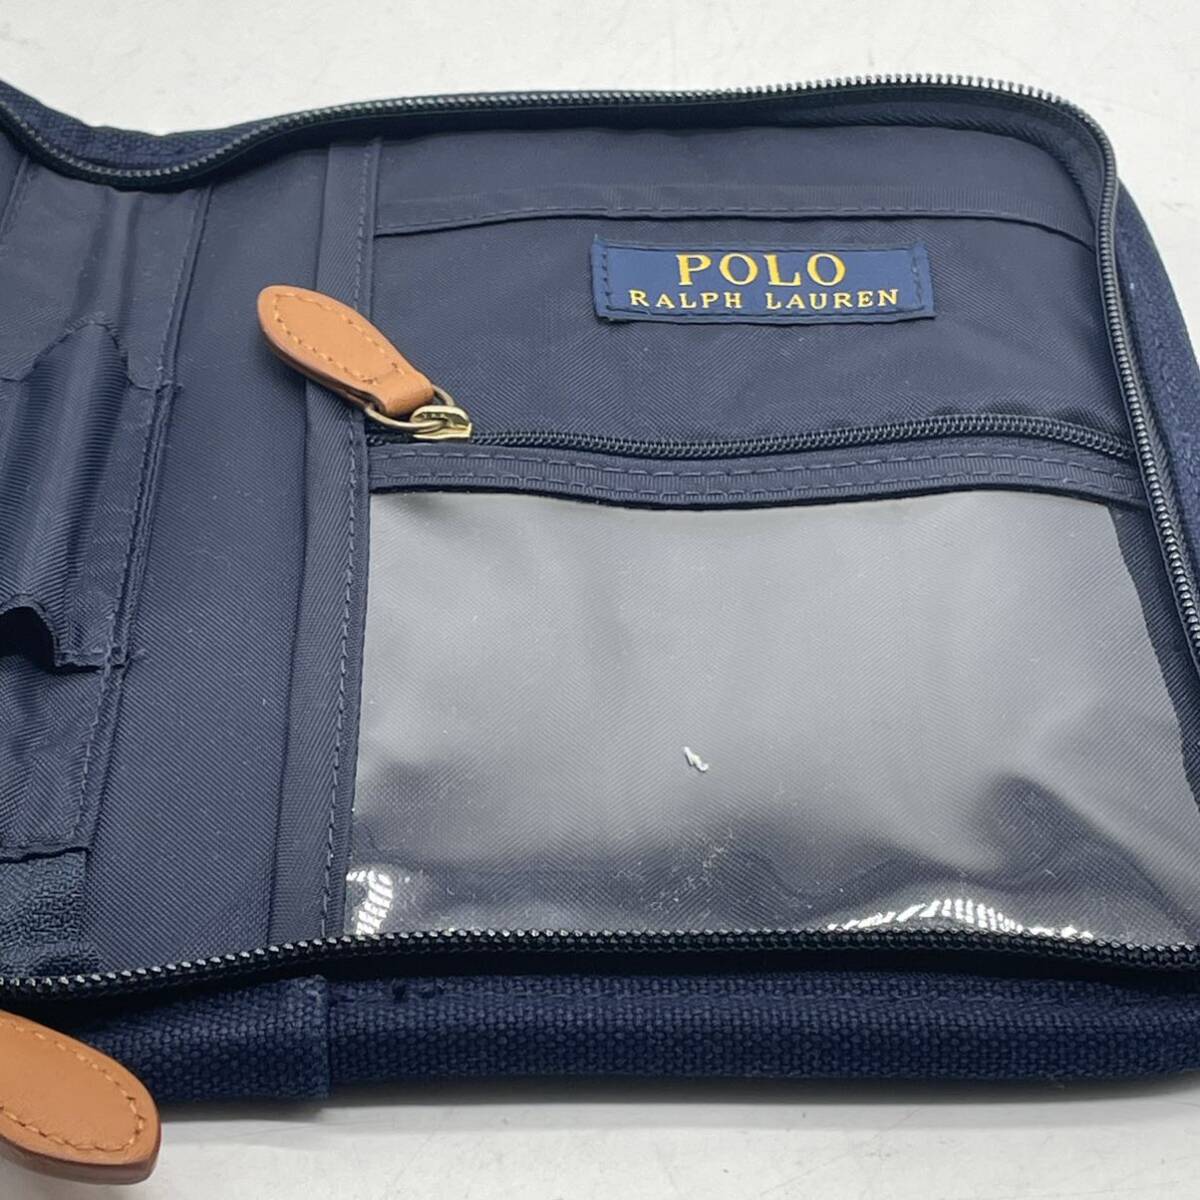 *KO2243*POLORALPH LAUREN Polo Ralph Lauren .. pocketbook case pouch multi case Logo embroidery navy × orange 